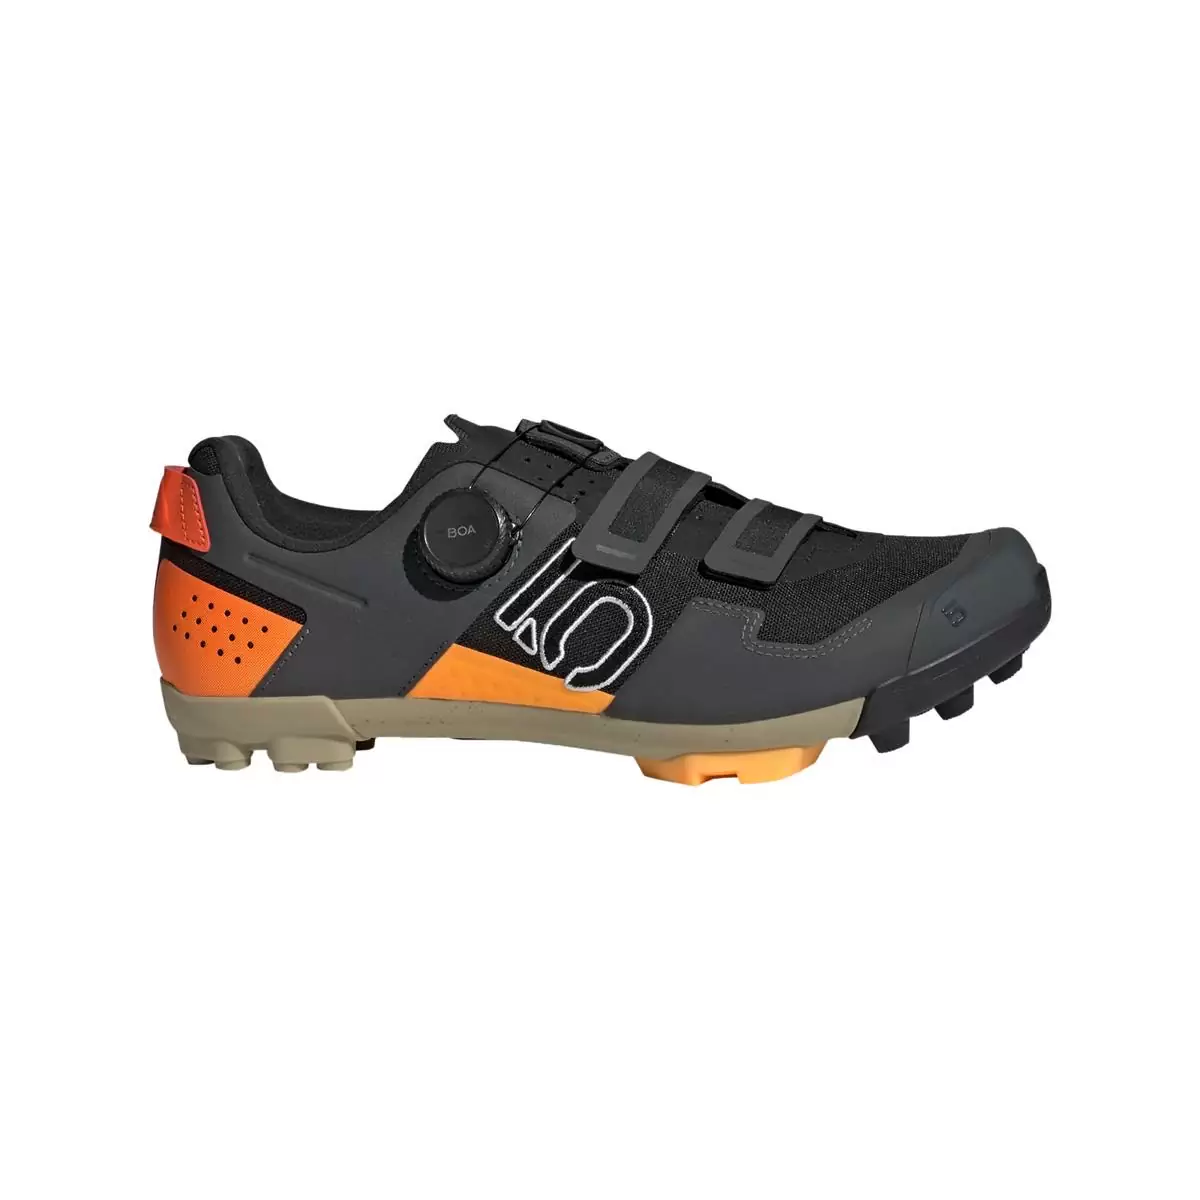 Clip 5.10 Kestrel Boa MTB Shoes Black/Orange Size 41.5 - image